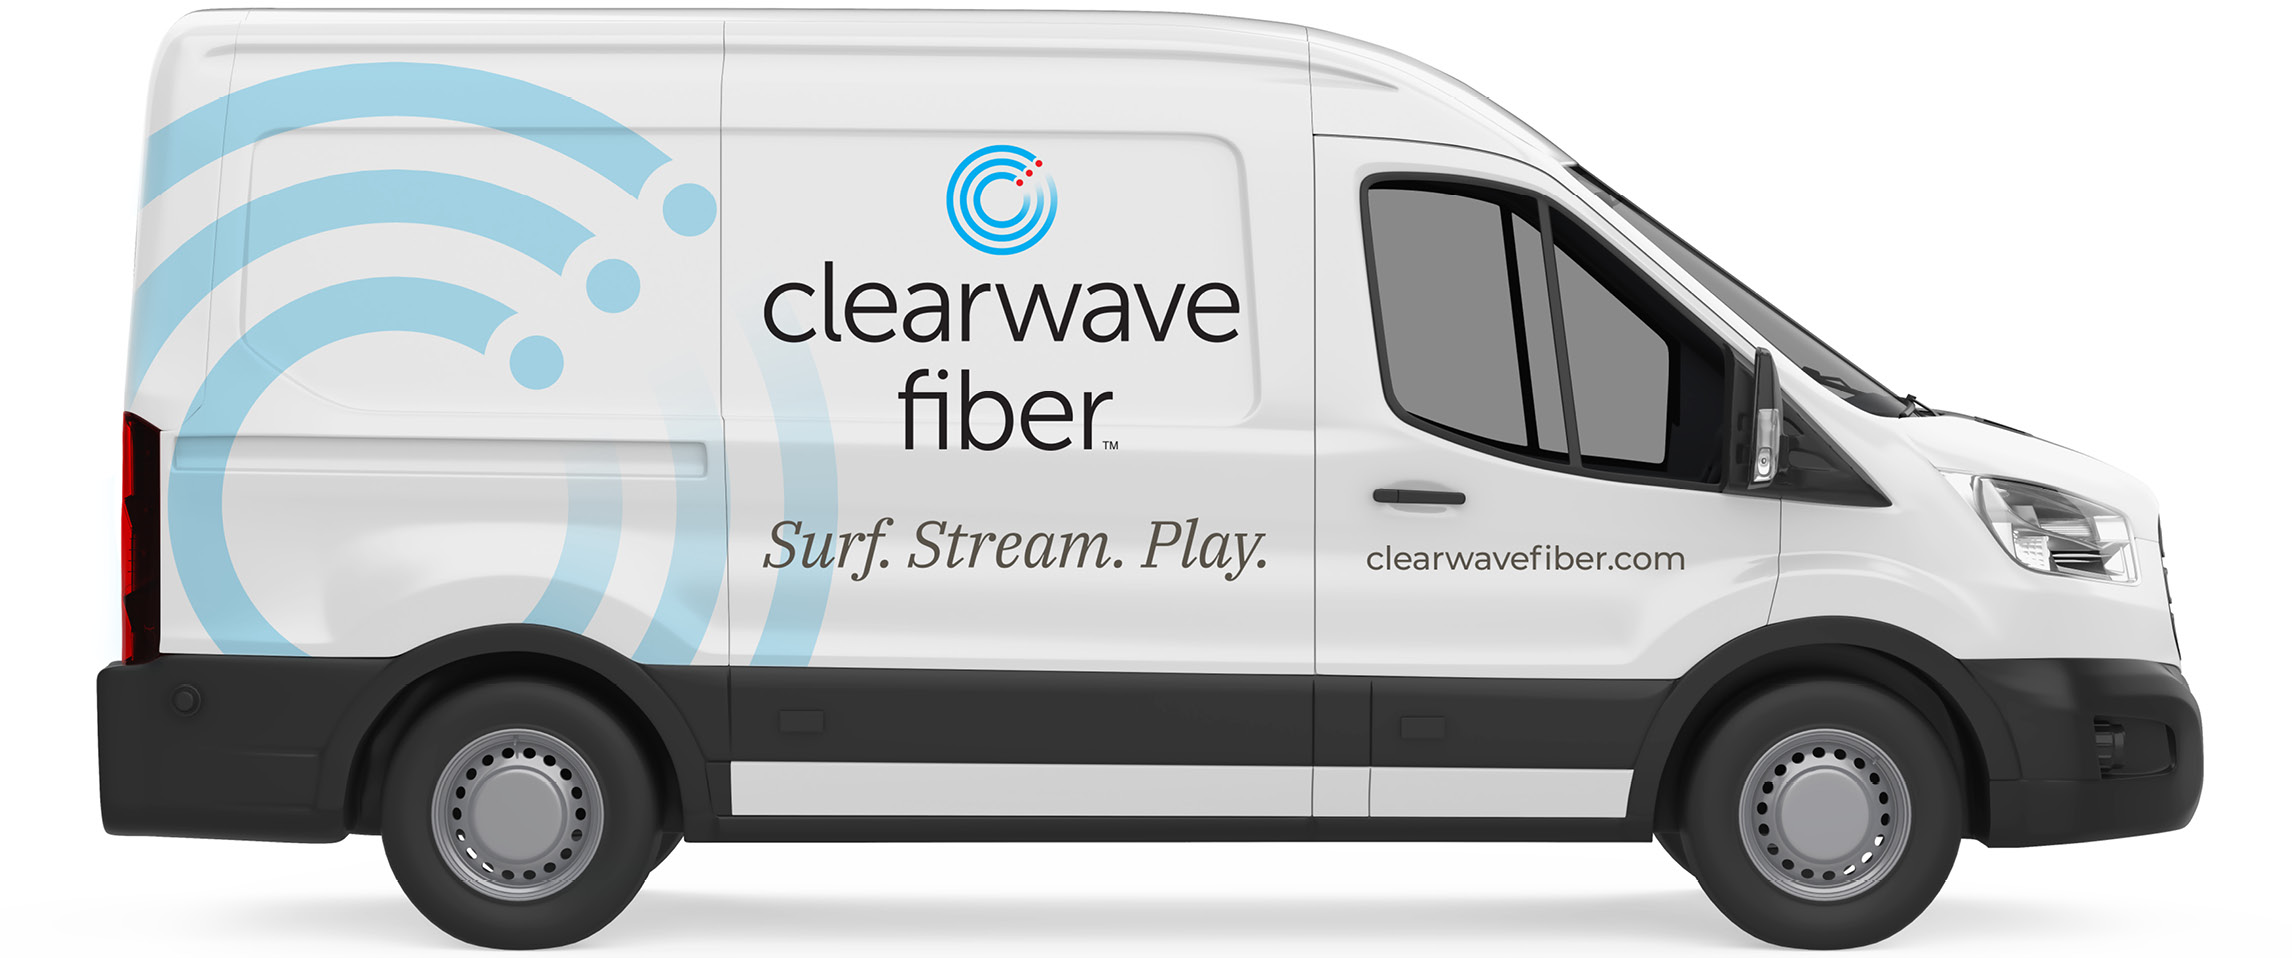 Clearewave Fiber business van with side decals